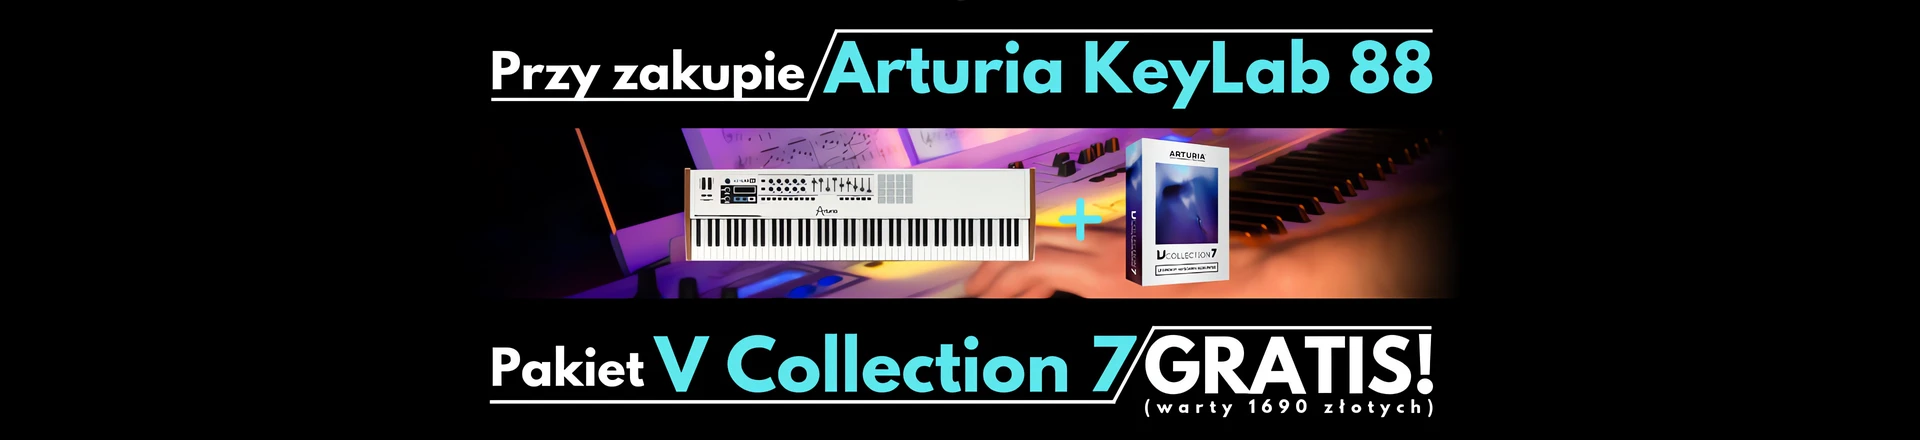 Arturia V Collection 7 gratis przy zakupie kontrolera KeyLab 88